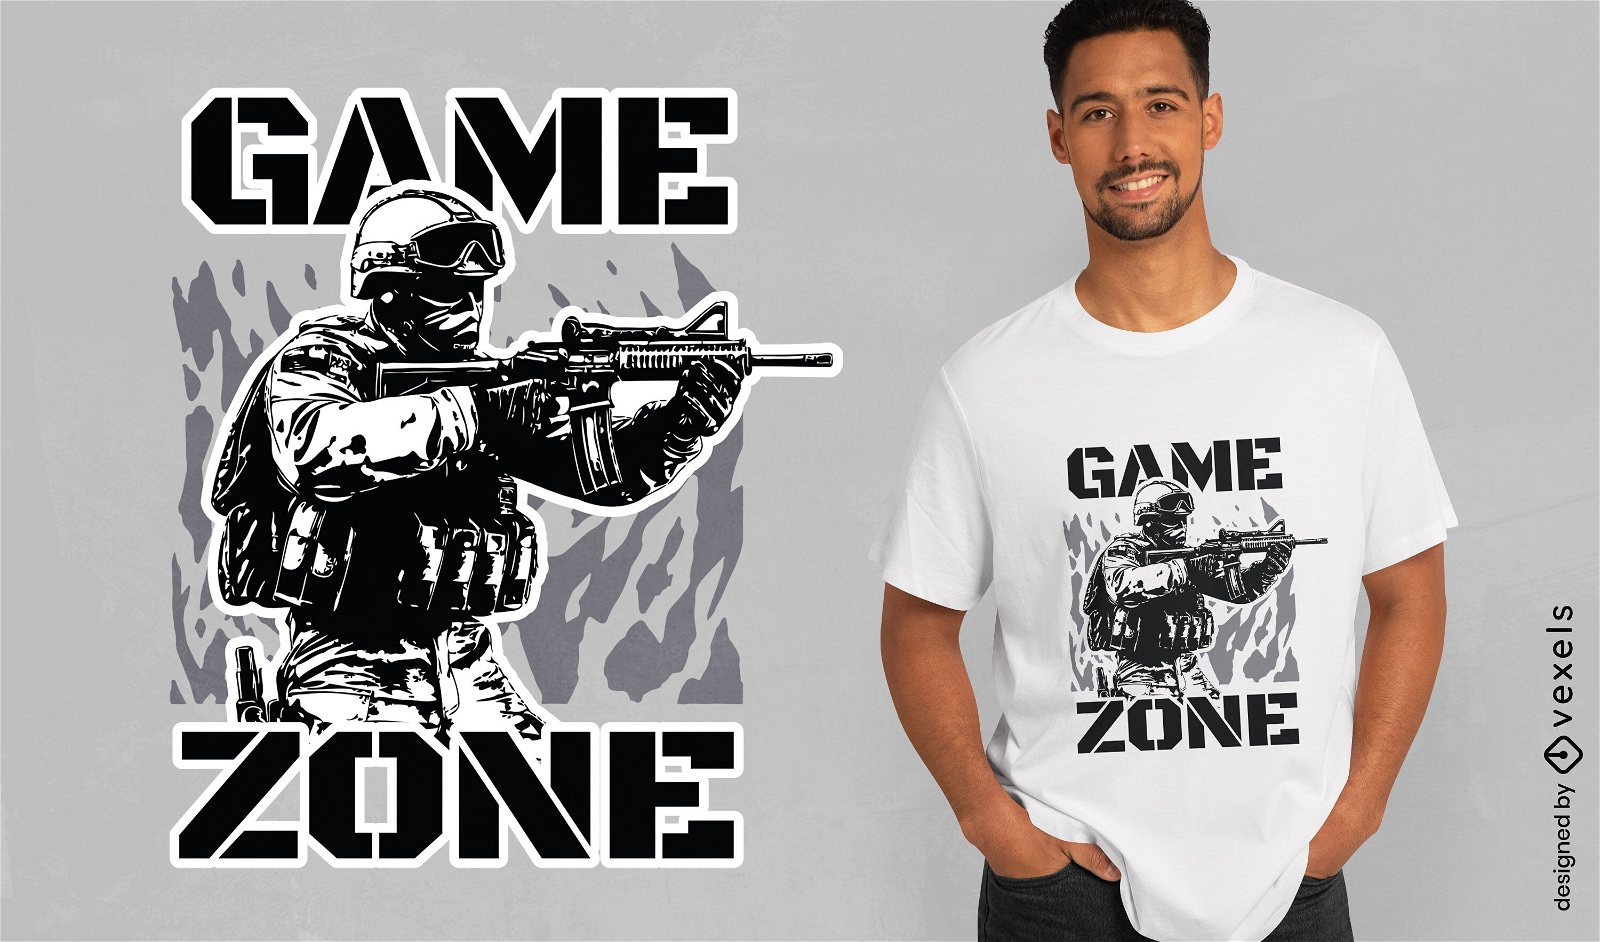 Military man game zone t-shirt design